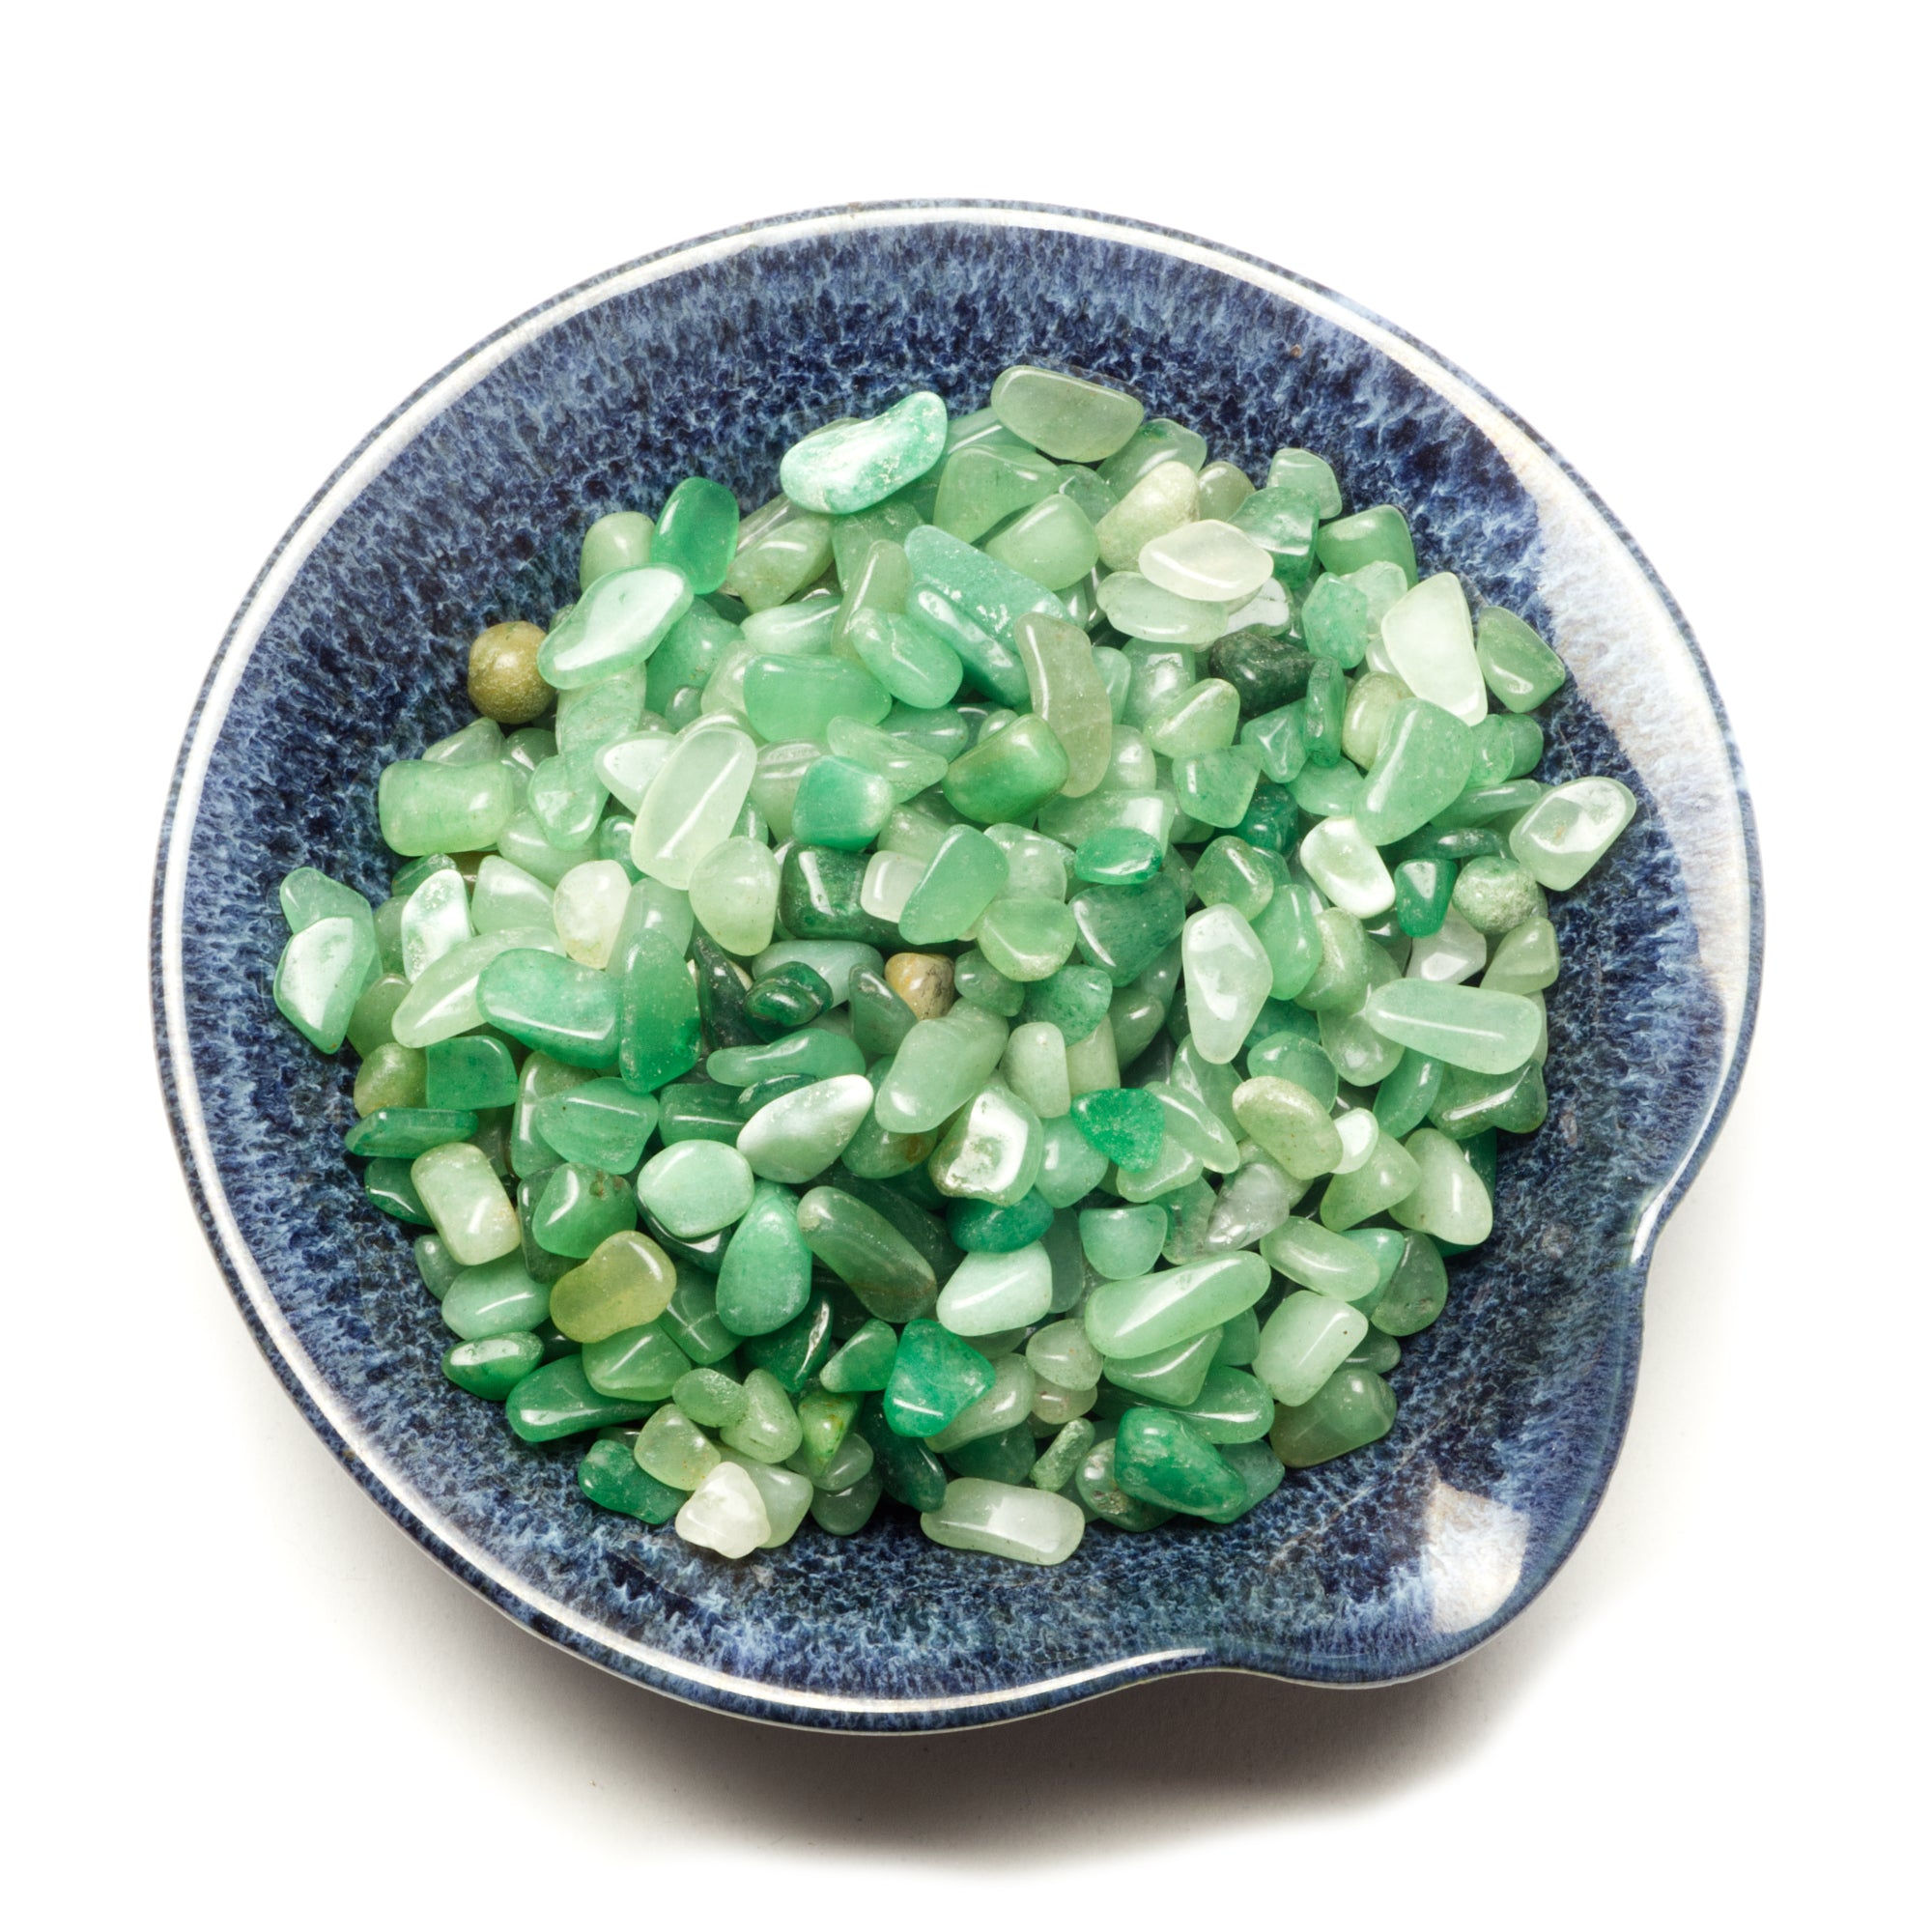 Polished Gemstone Chips | 1/2 Pound (Green Aventurine)